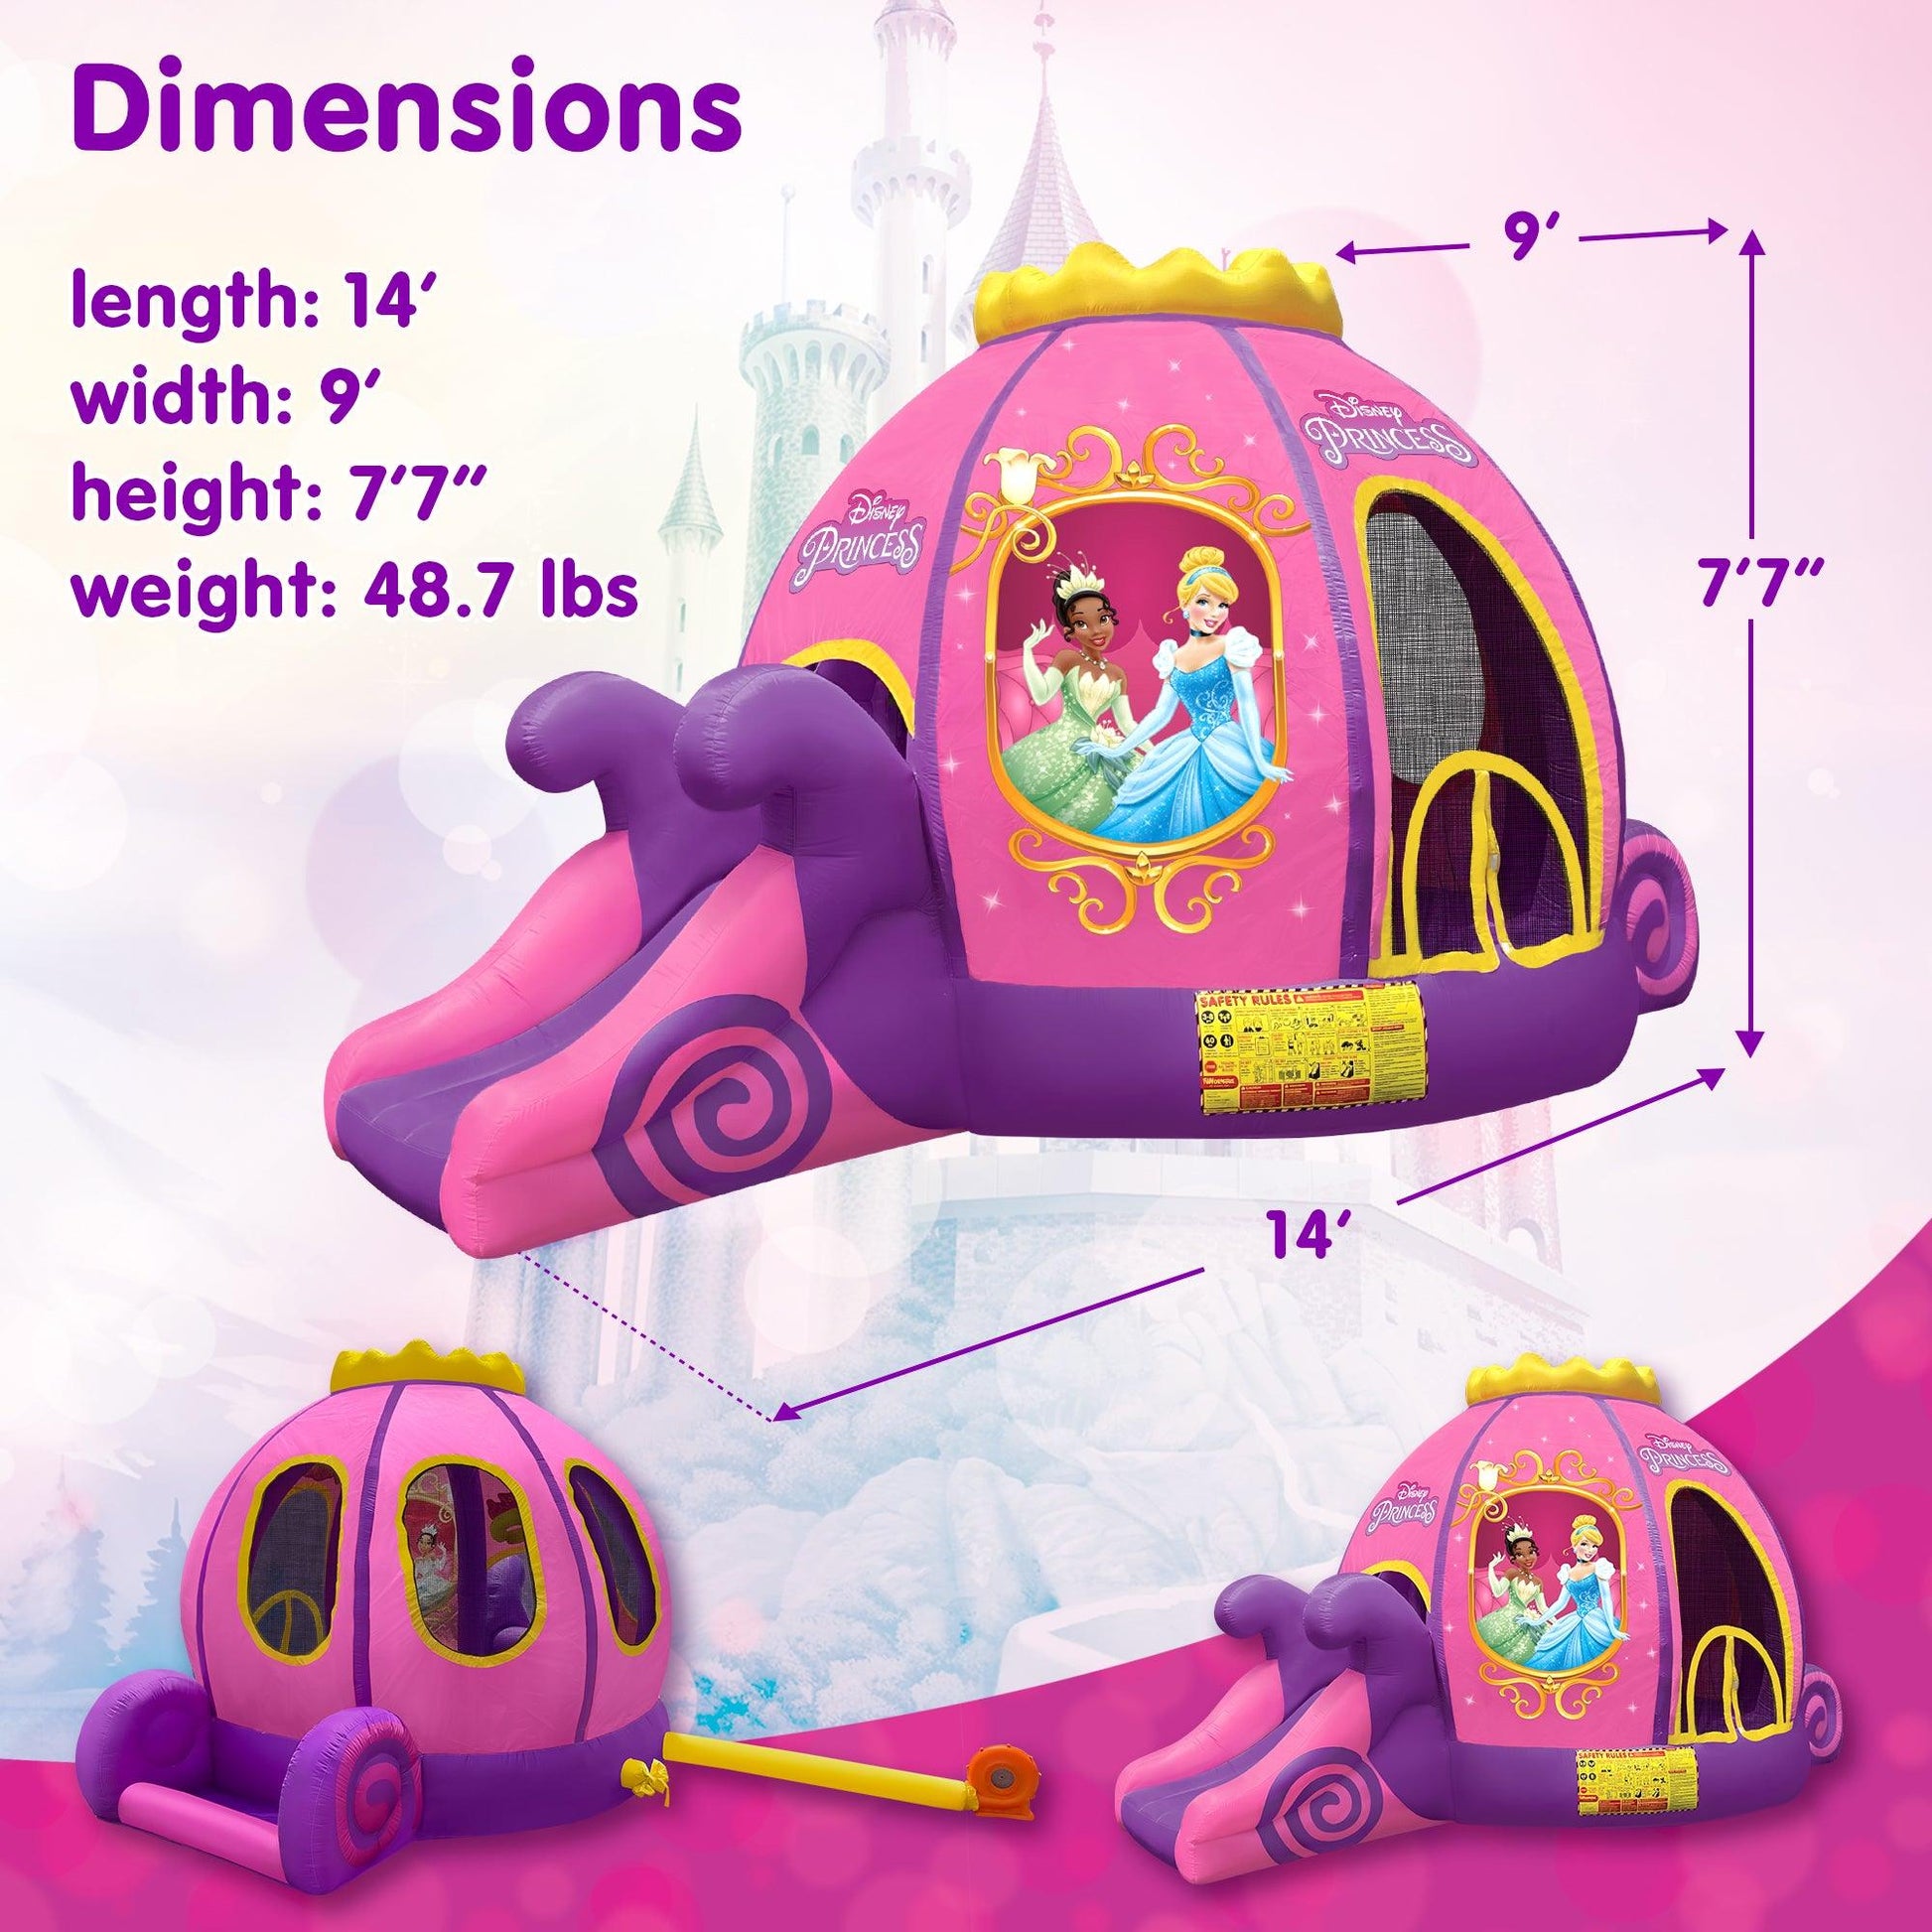 Disney Princess Carriage Bounce House for Sale